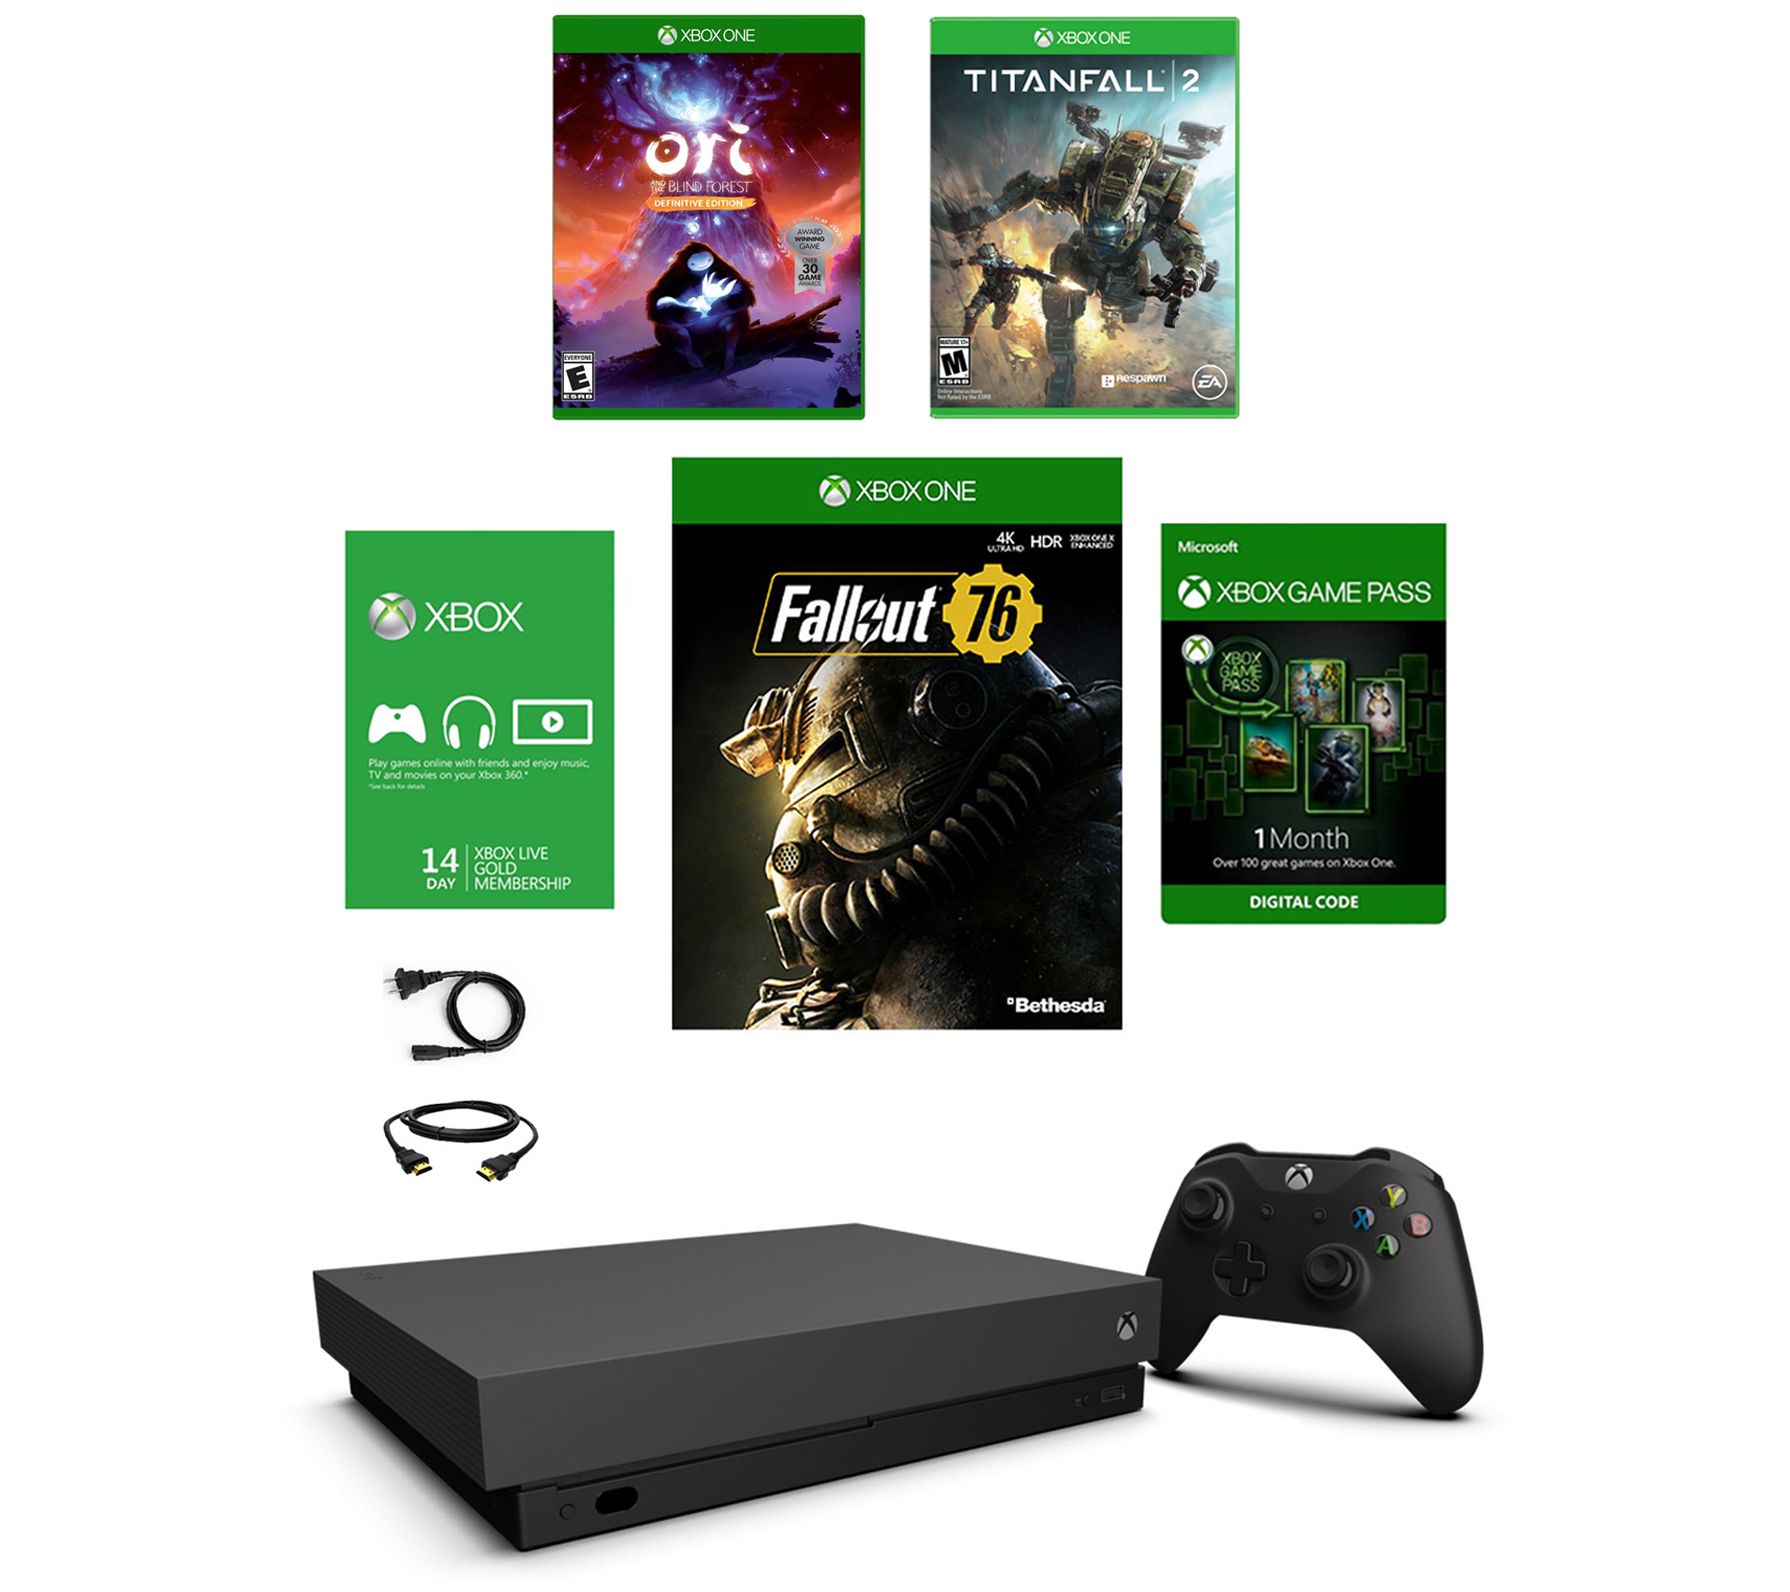 Xbox One X 1TB w/ Fallout 76, Titanfall 2 and Ori - QVC.com